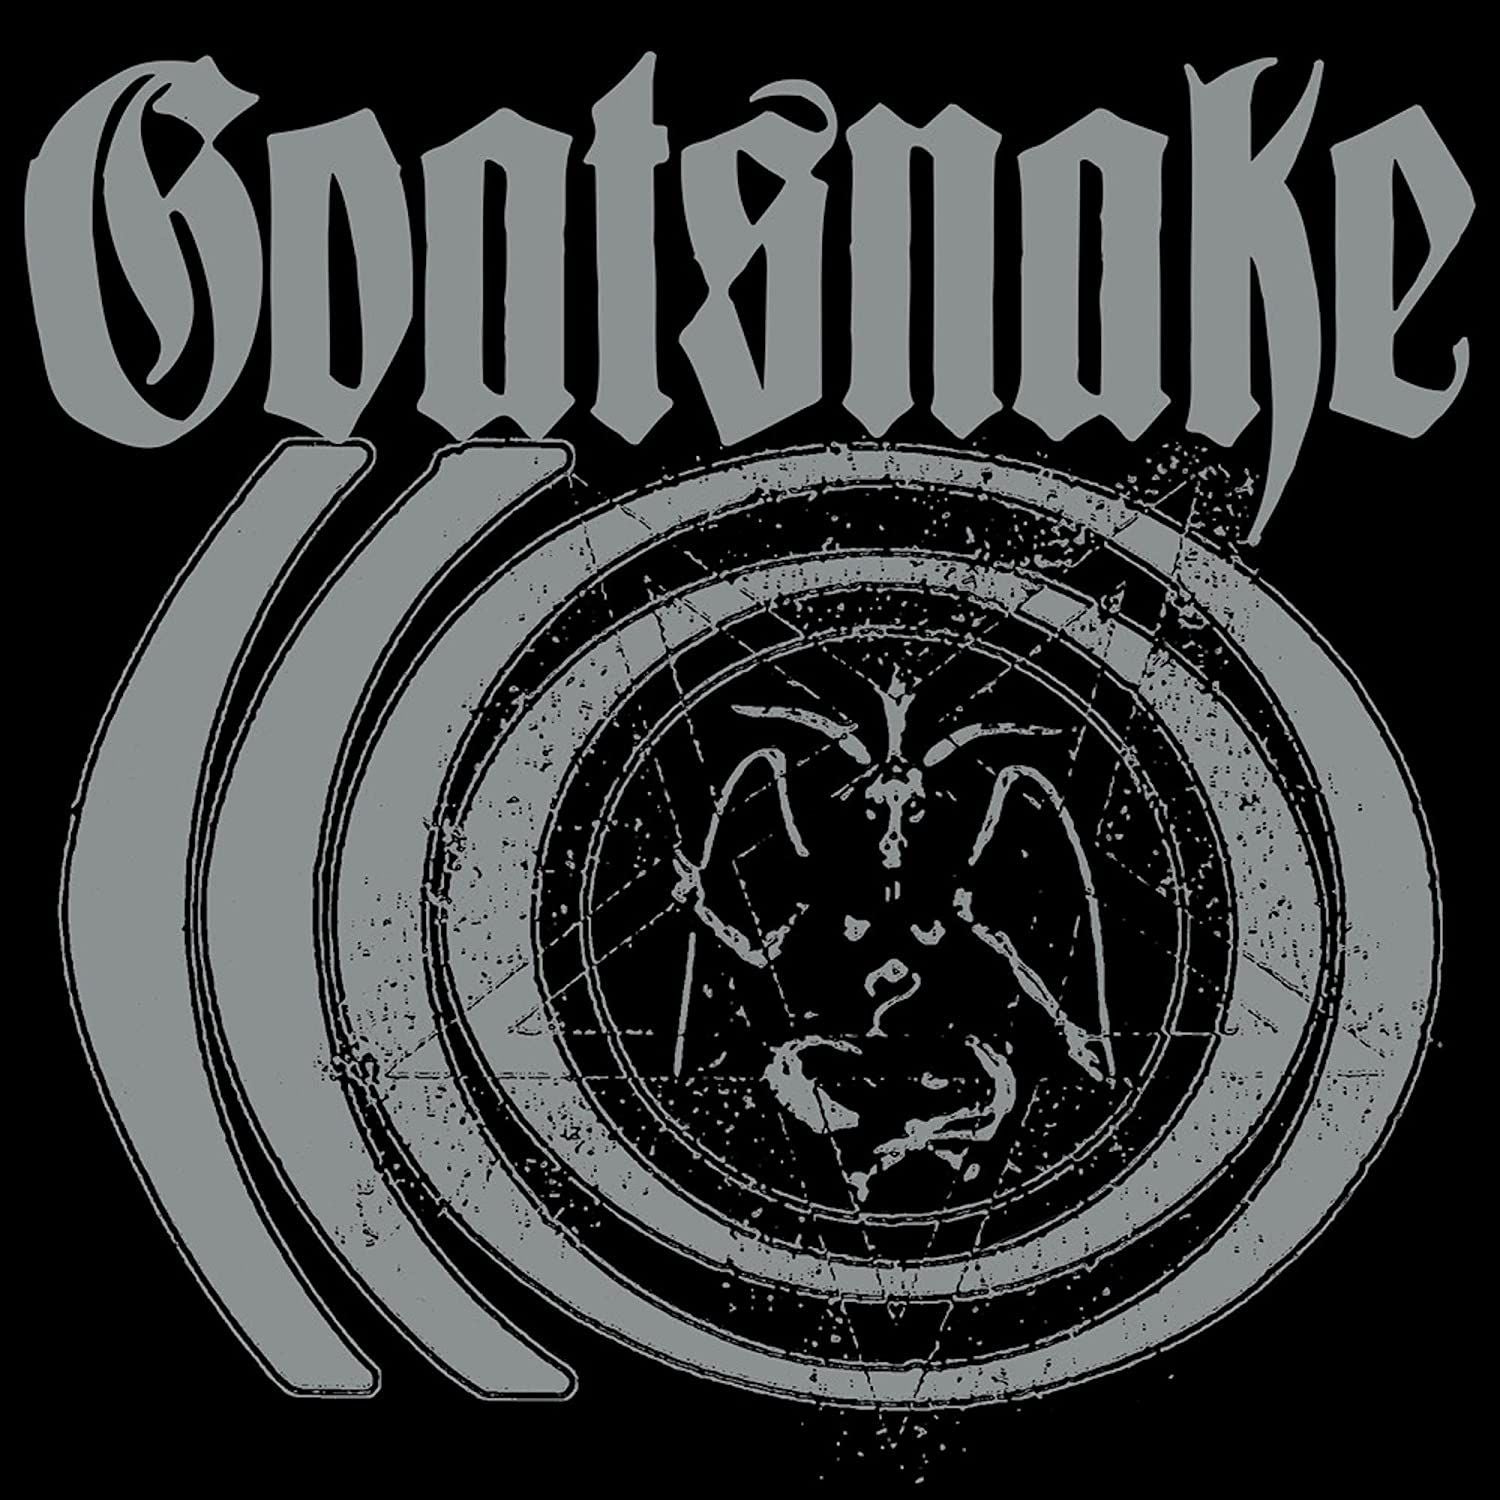 Goatsnake - 1 (Ltd. Ed. 2022 Transparent Red vinyl reissue - 500 copies) - Vinyl - New